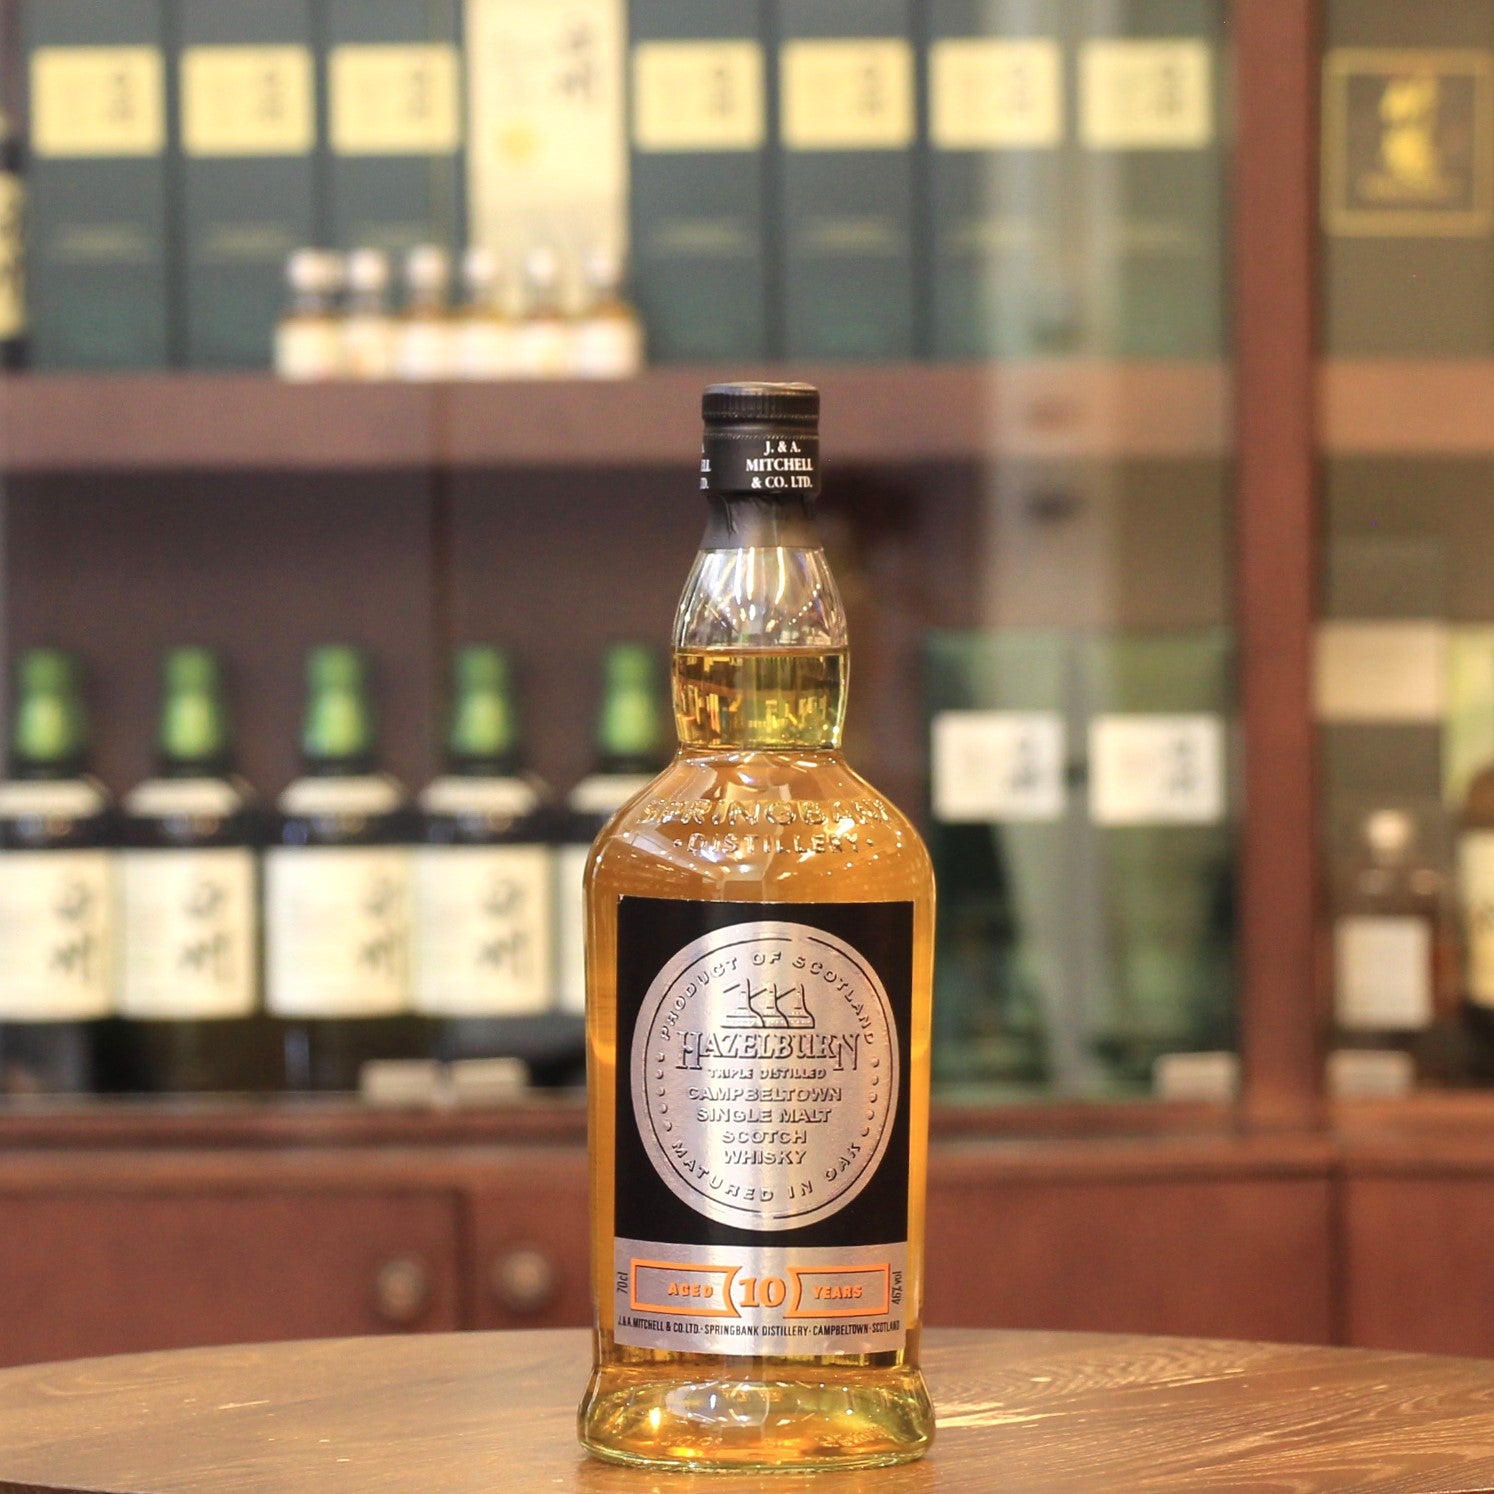 Hazelburn 10 Years Old Scotch Single Malt Whisky 2021 Release